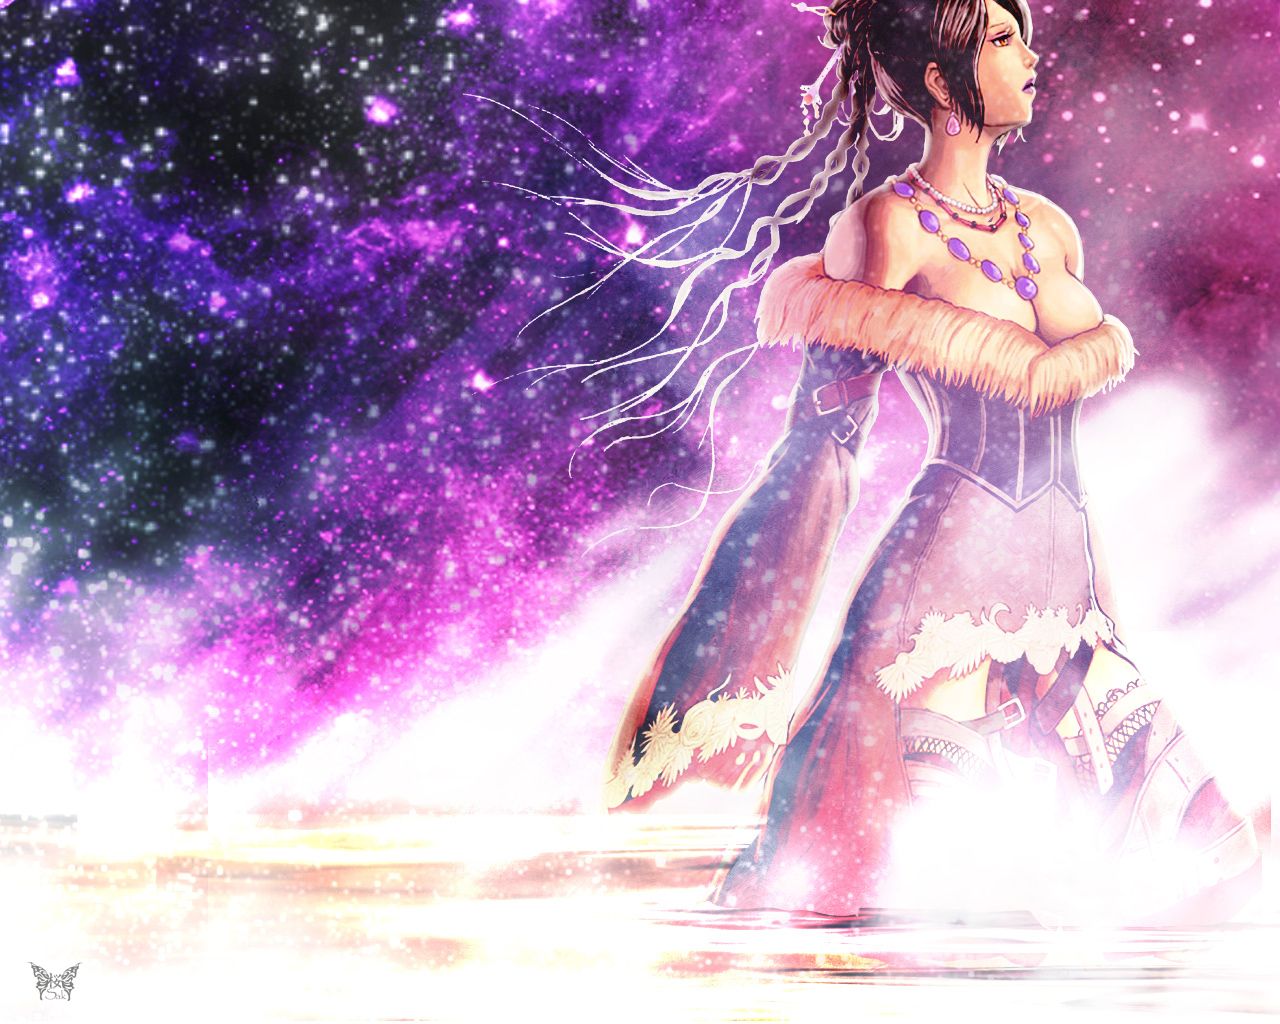 Final Fantasy X Wallpaper: Lulu the dark Mage of Spira